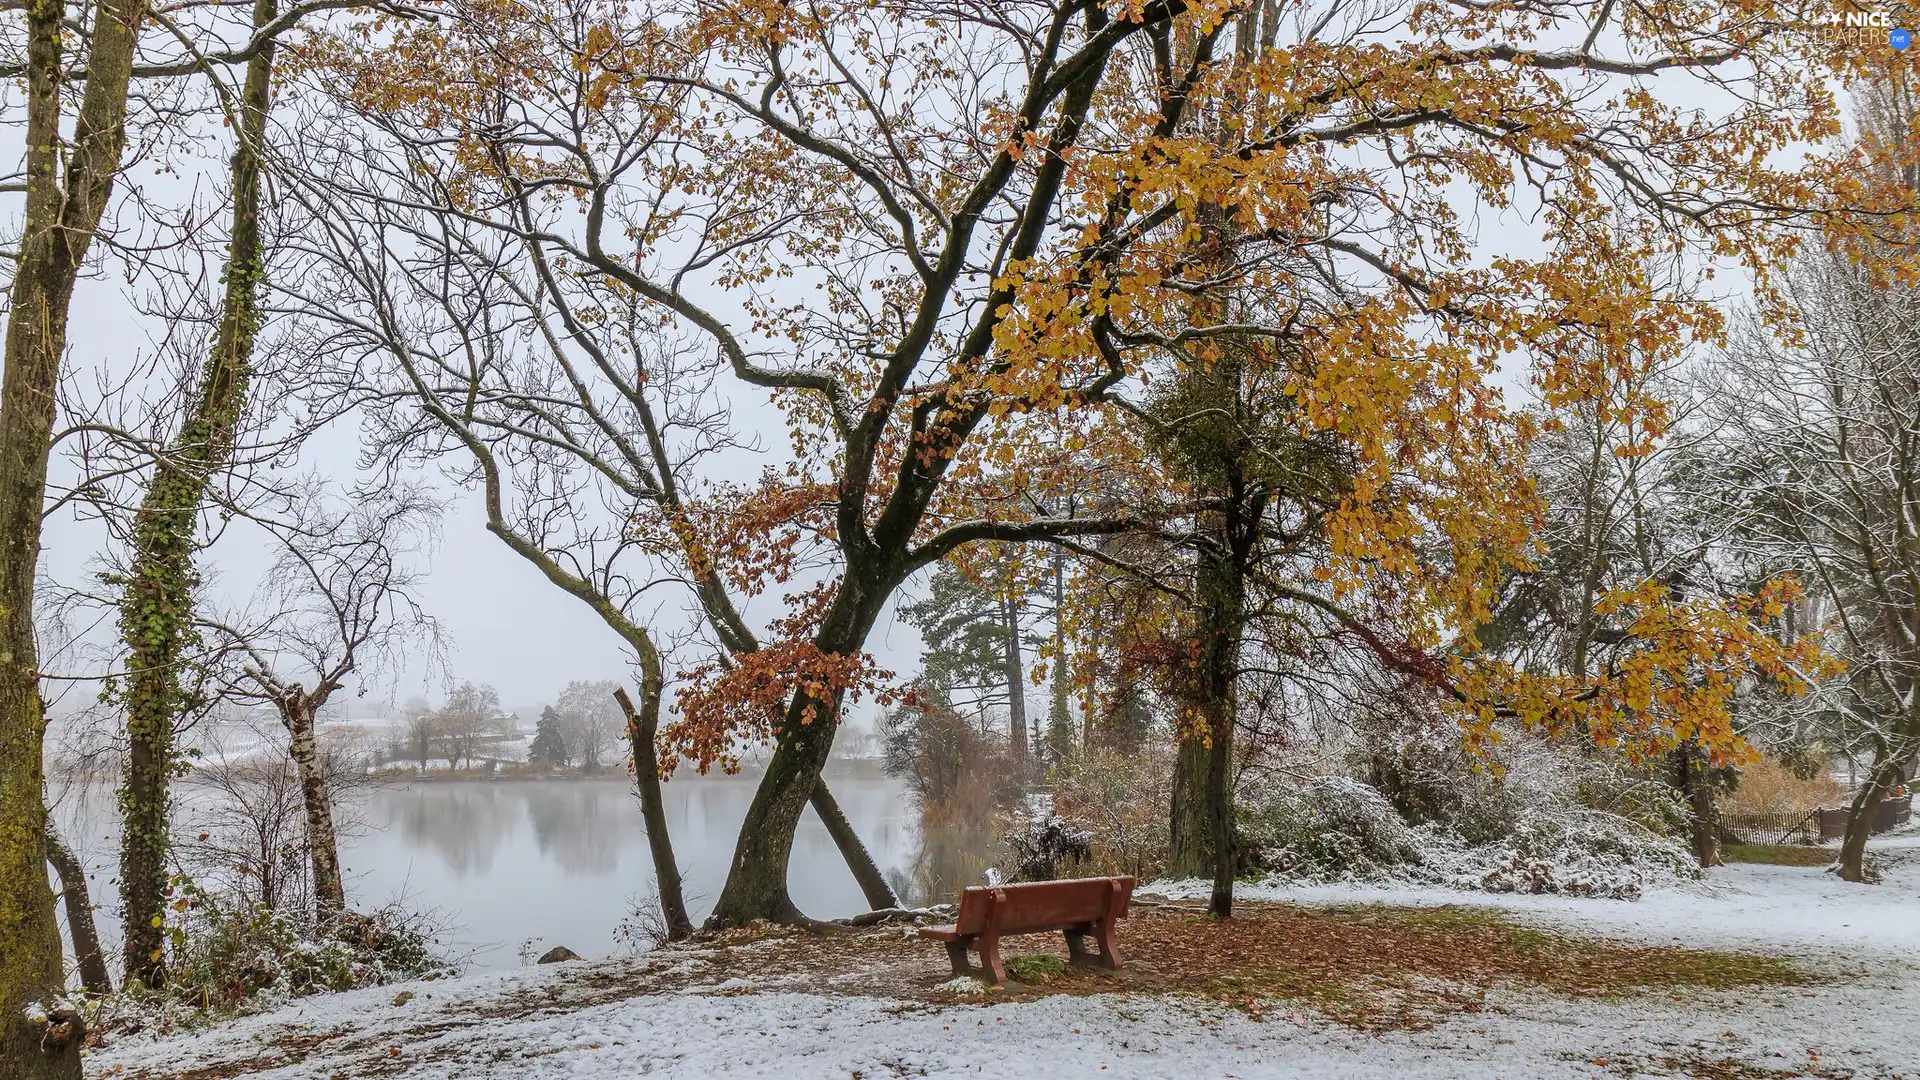 Bench, snow, Pond - car, Park, autumn